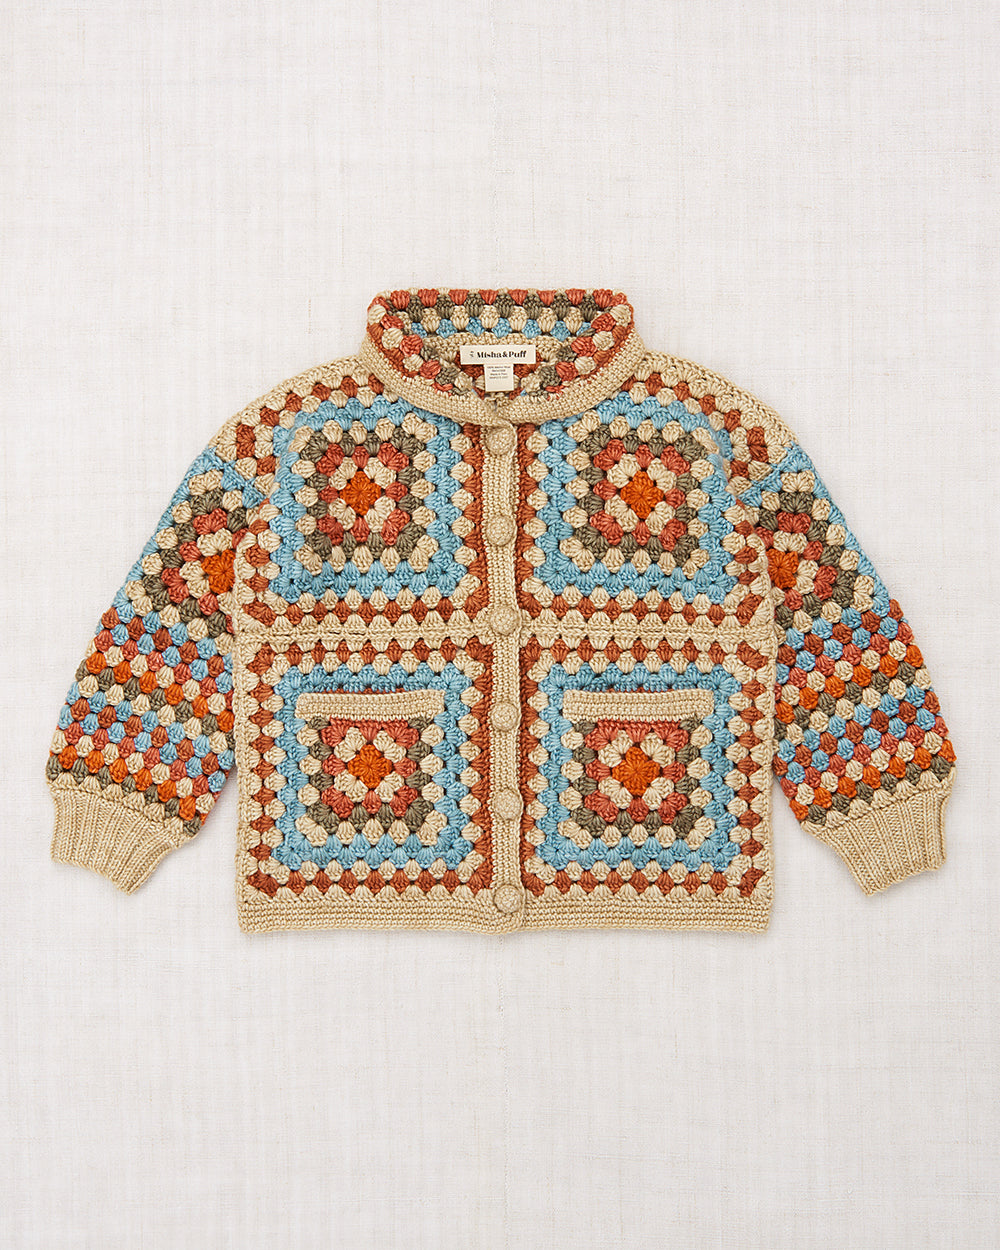 Crochet Big Square Jacket